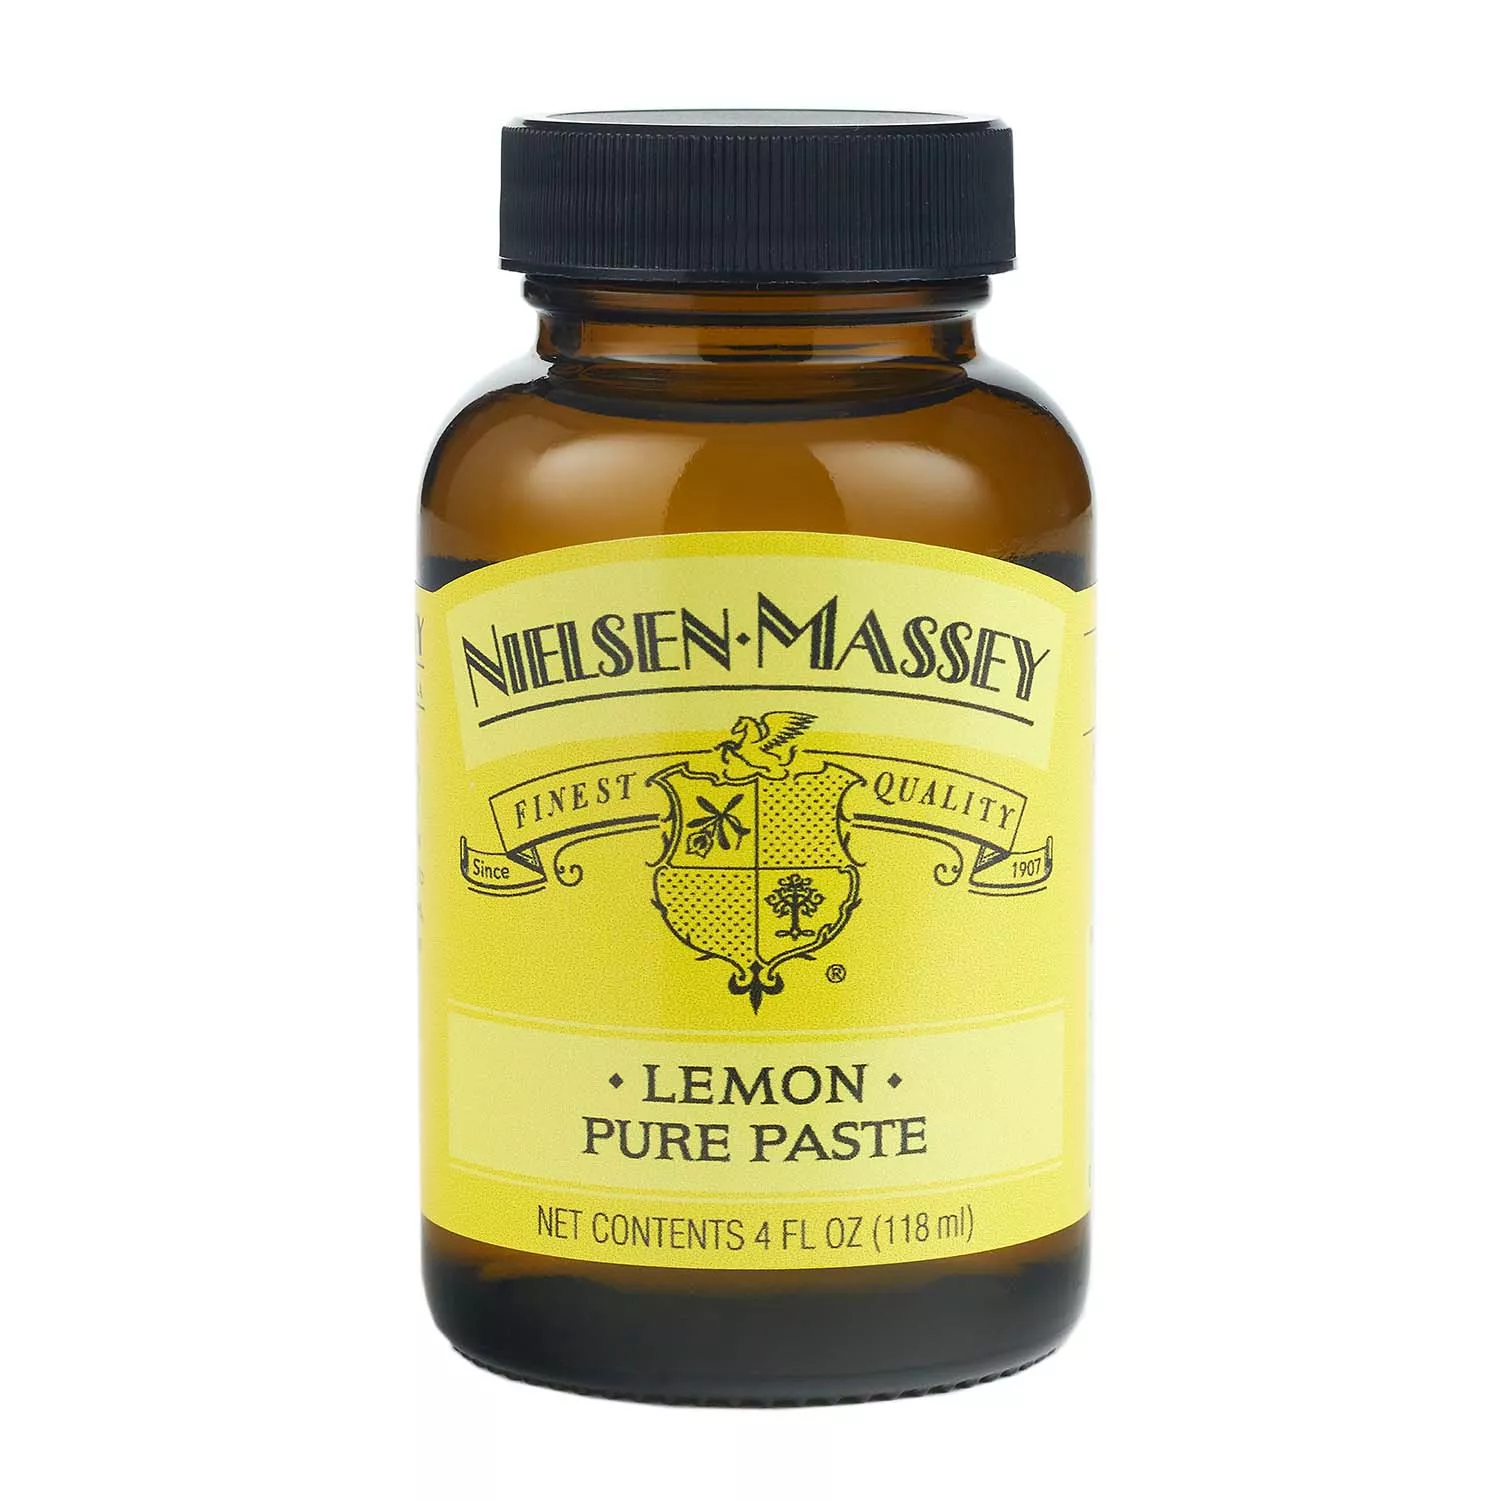 Nielsen-Massey Pure Lemon Paste, 4 oz.